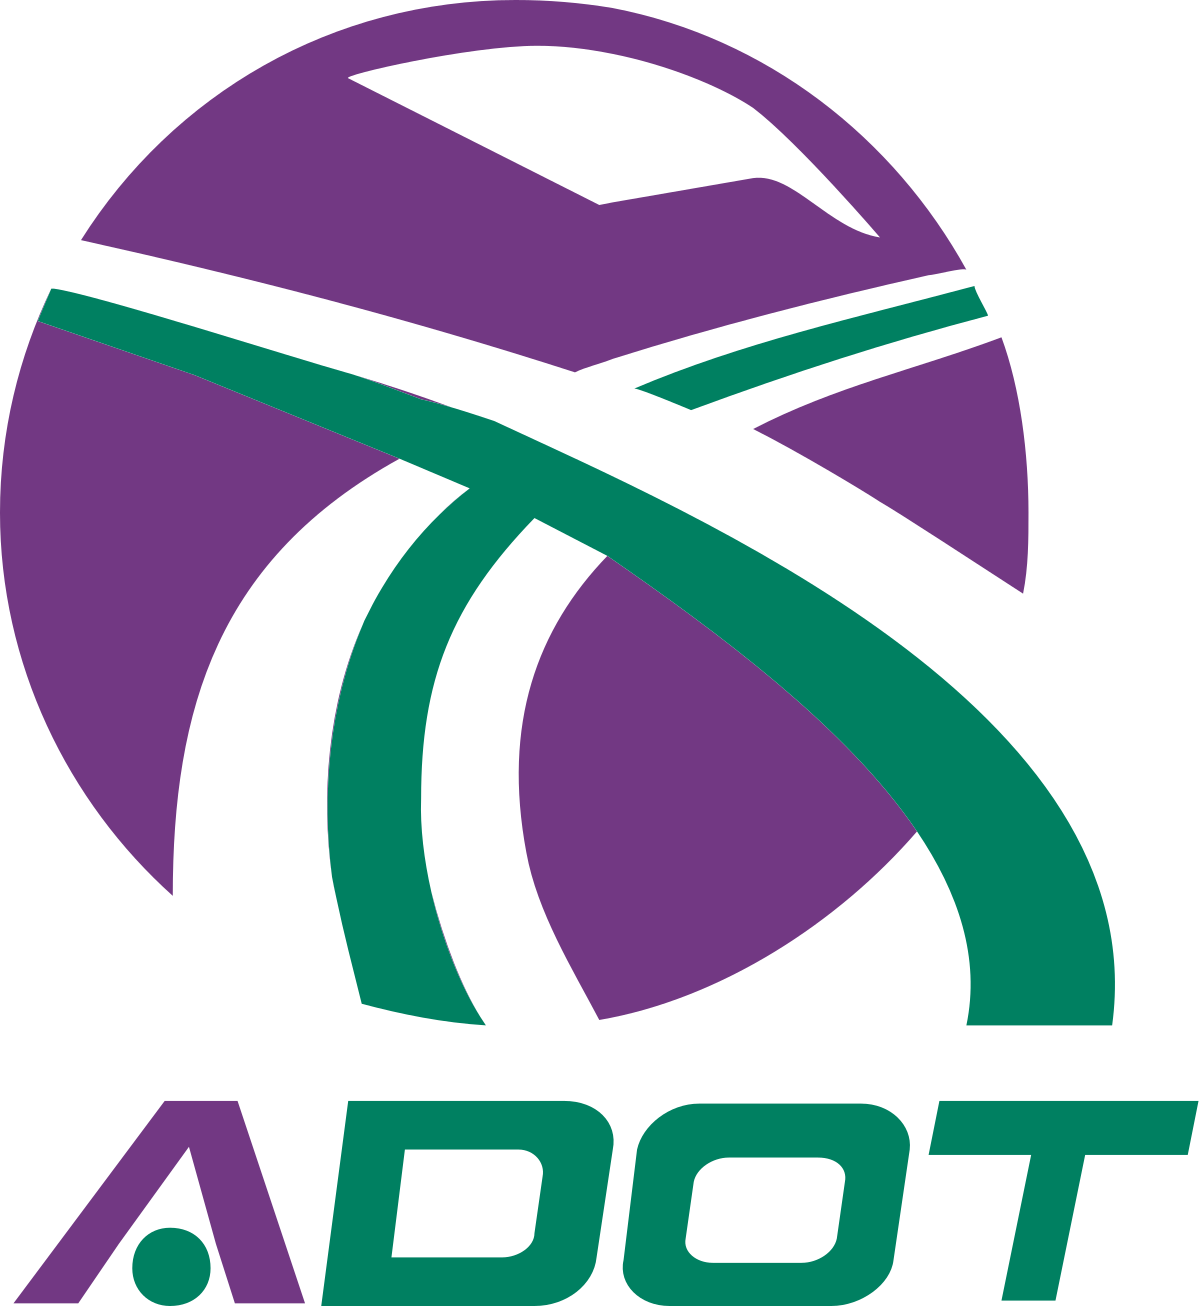 Arizona Department of Transportation logo.svg